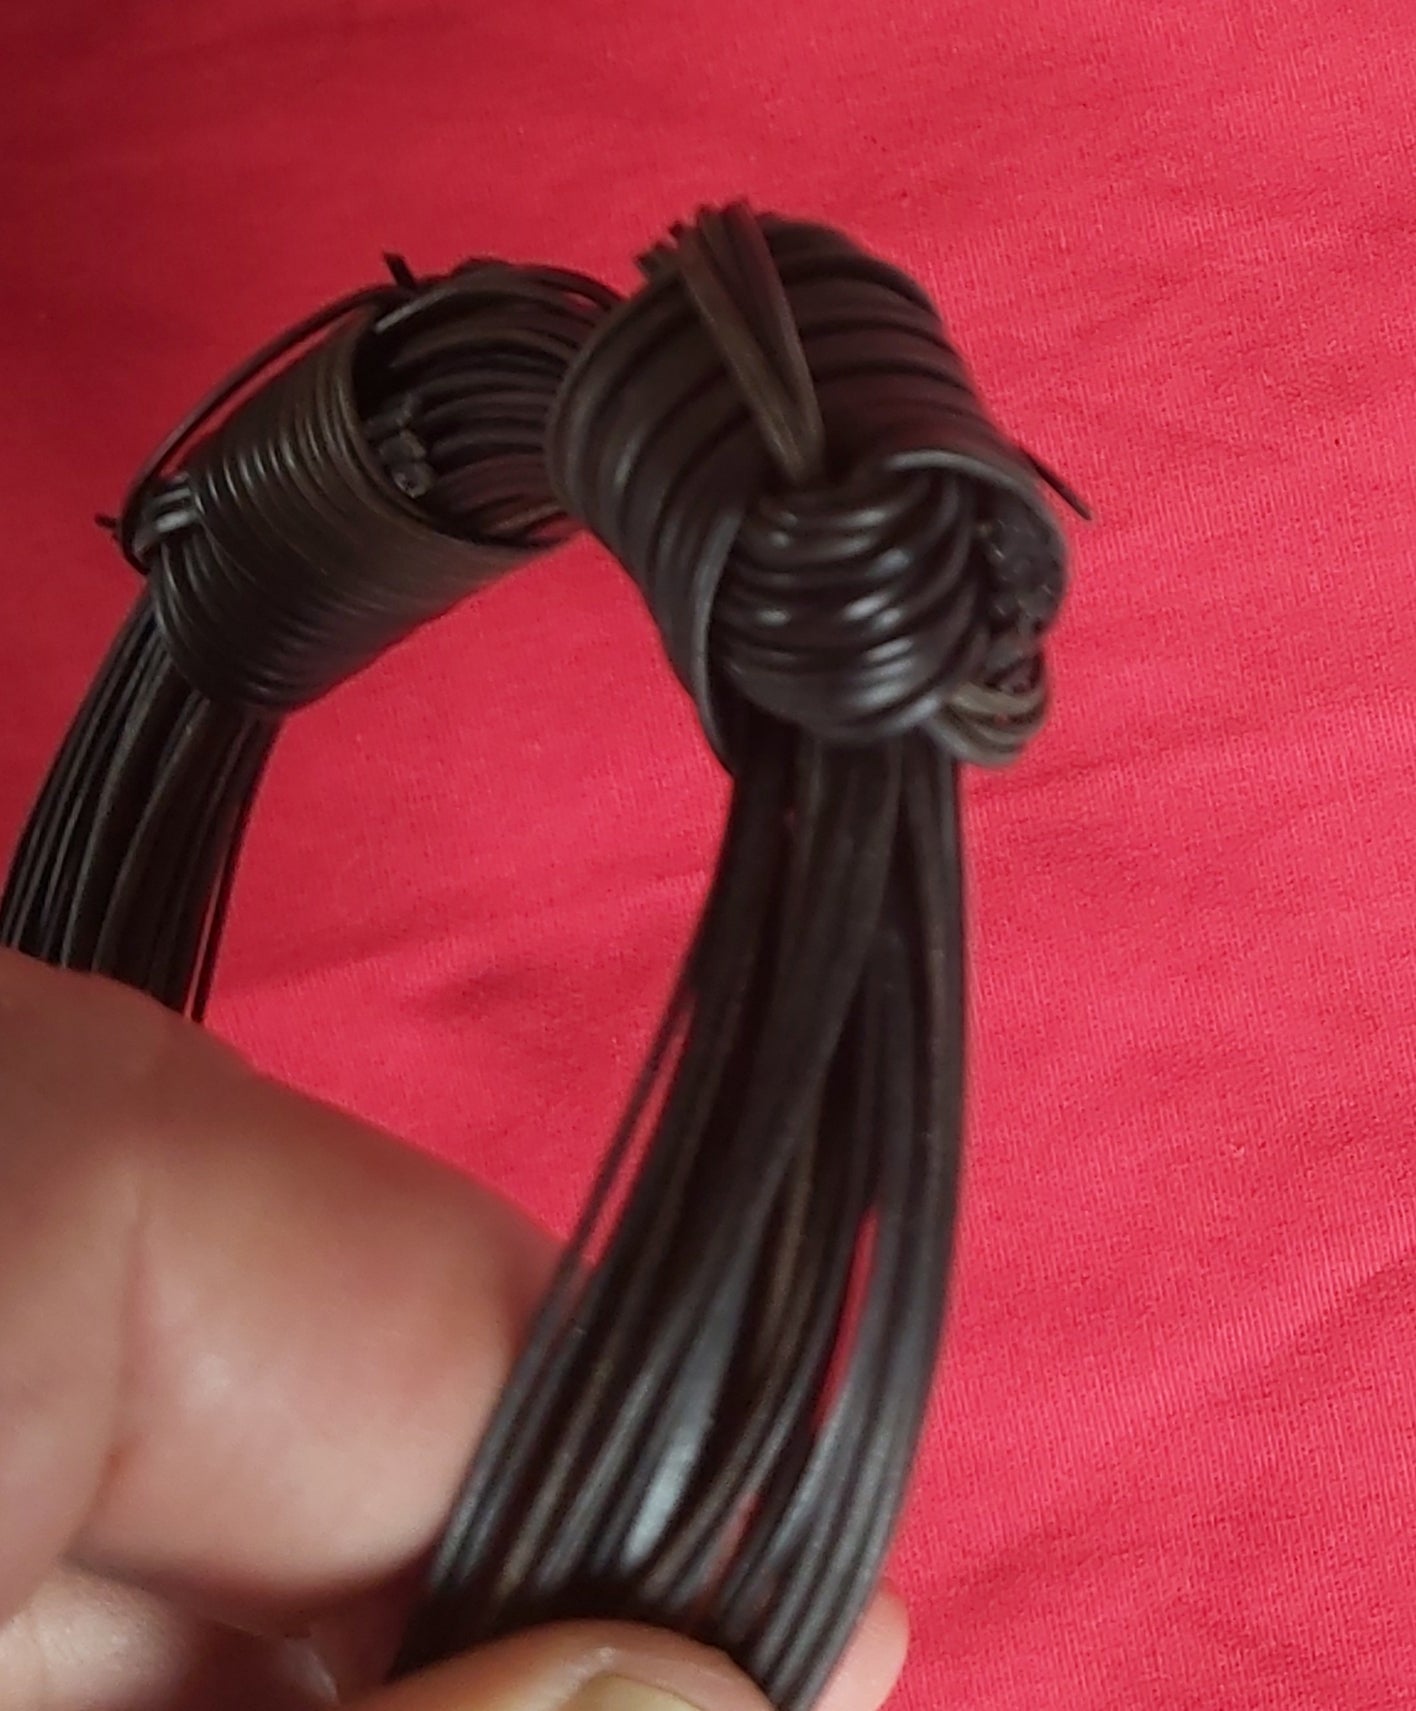 VB5 3 Knot bulky elephant hair bracelet 3" max. Diameter